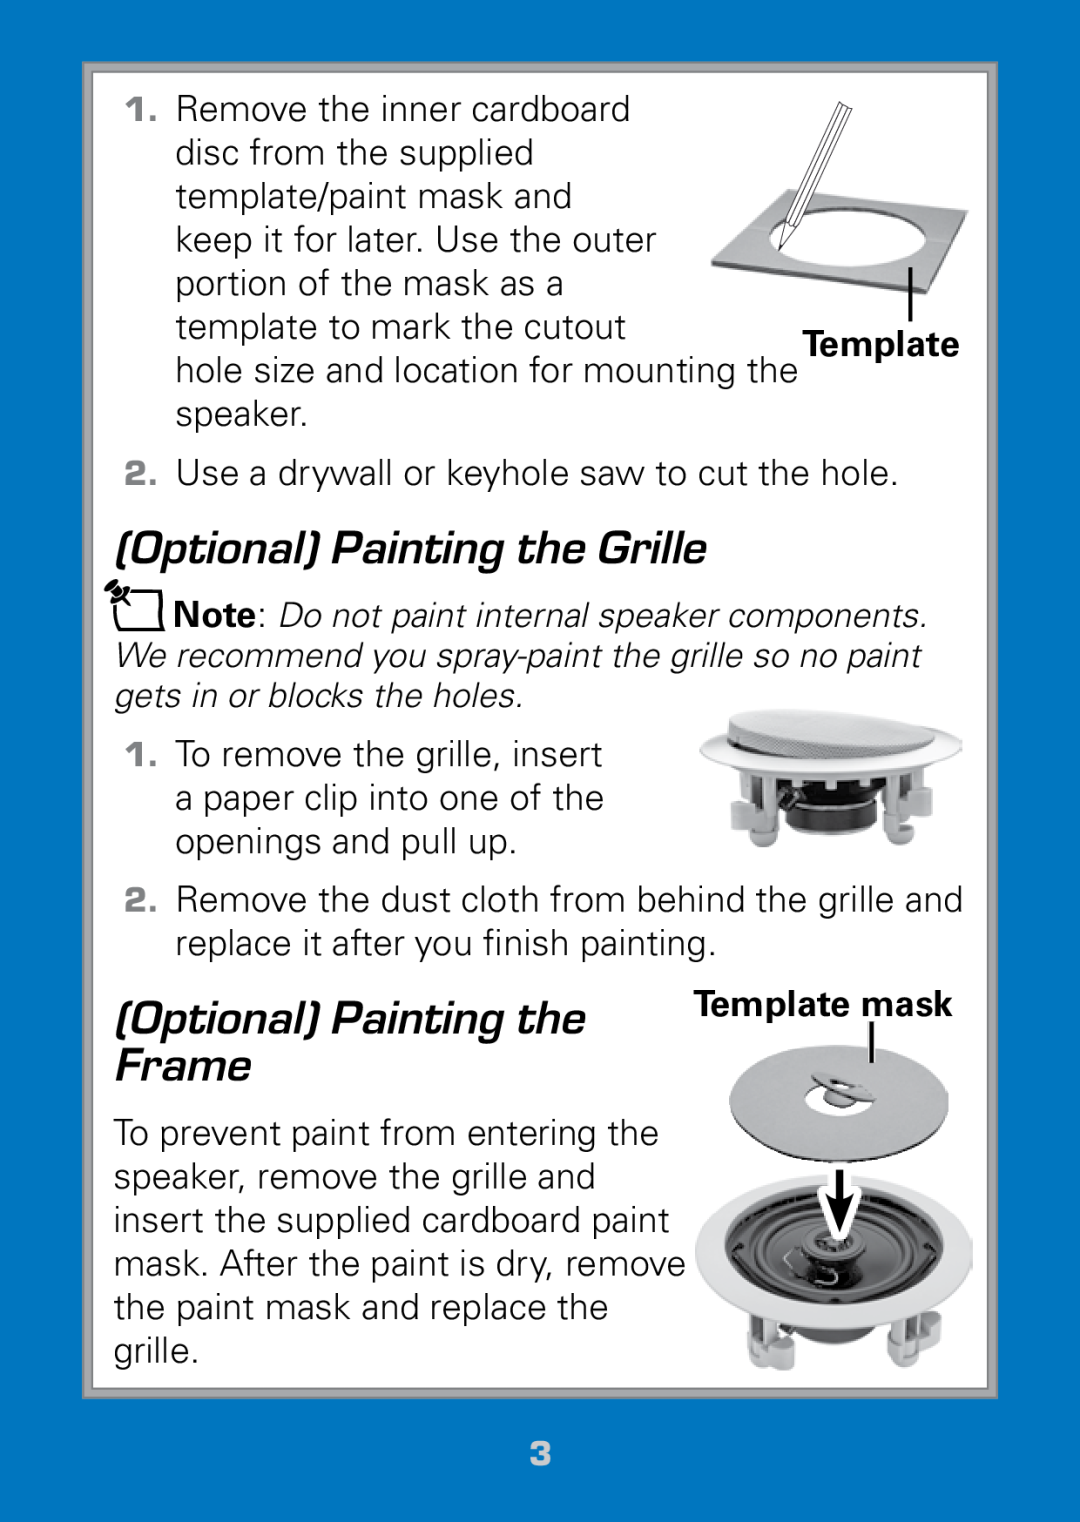 Radio Shack 40-289 manual Optional Painting the Grille, Optional Painting the Frame, Template mask 